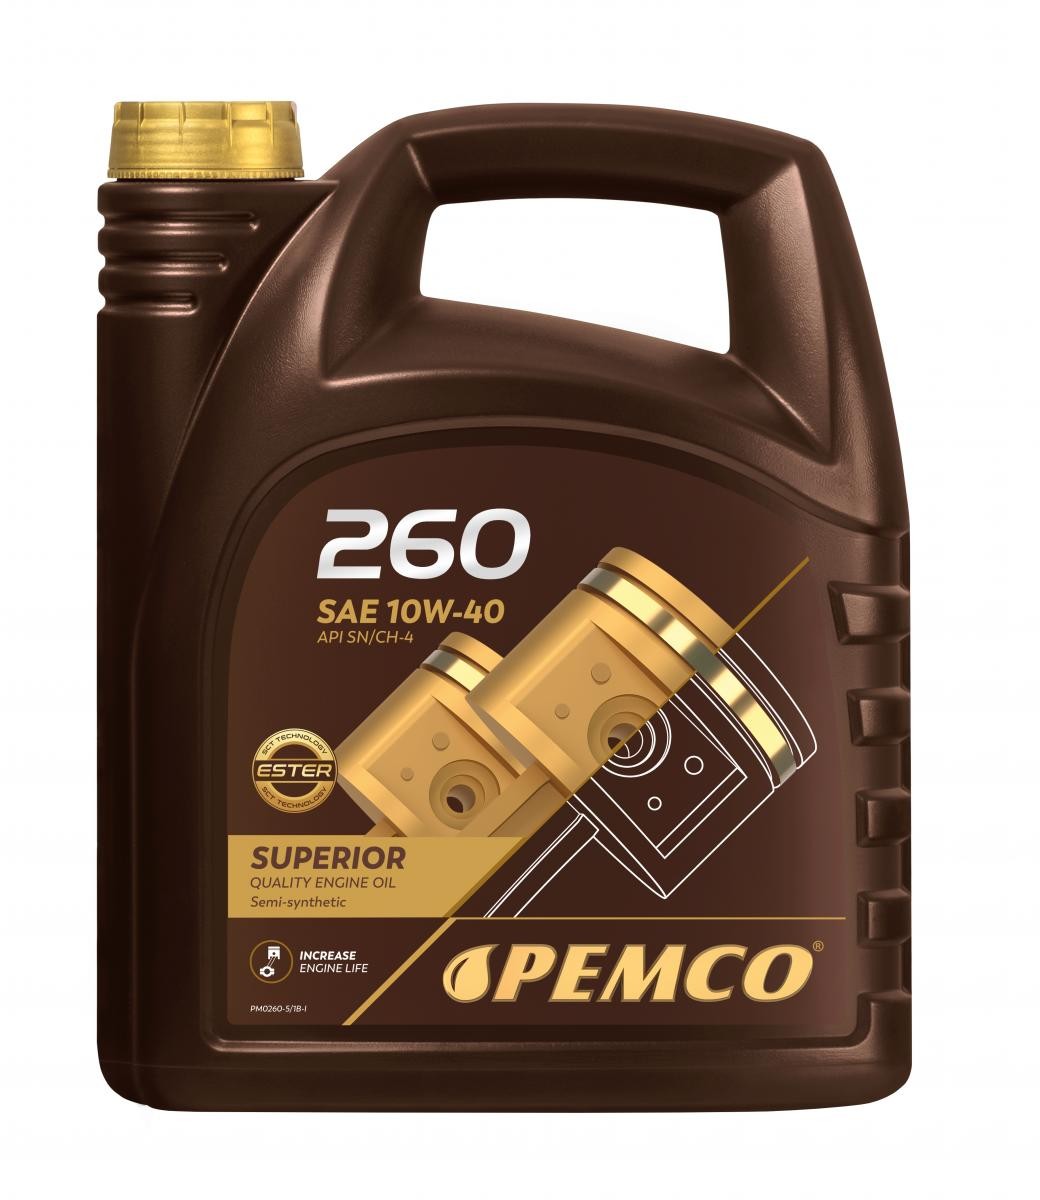 PEMCO iDRIVE 200, iDRIVE 260 PM0260-5 Motorolie 10W-40, 5L, Deels synthetische olie